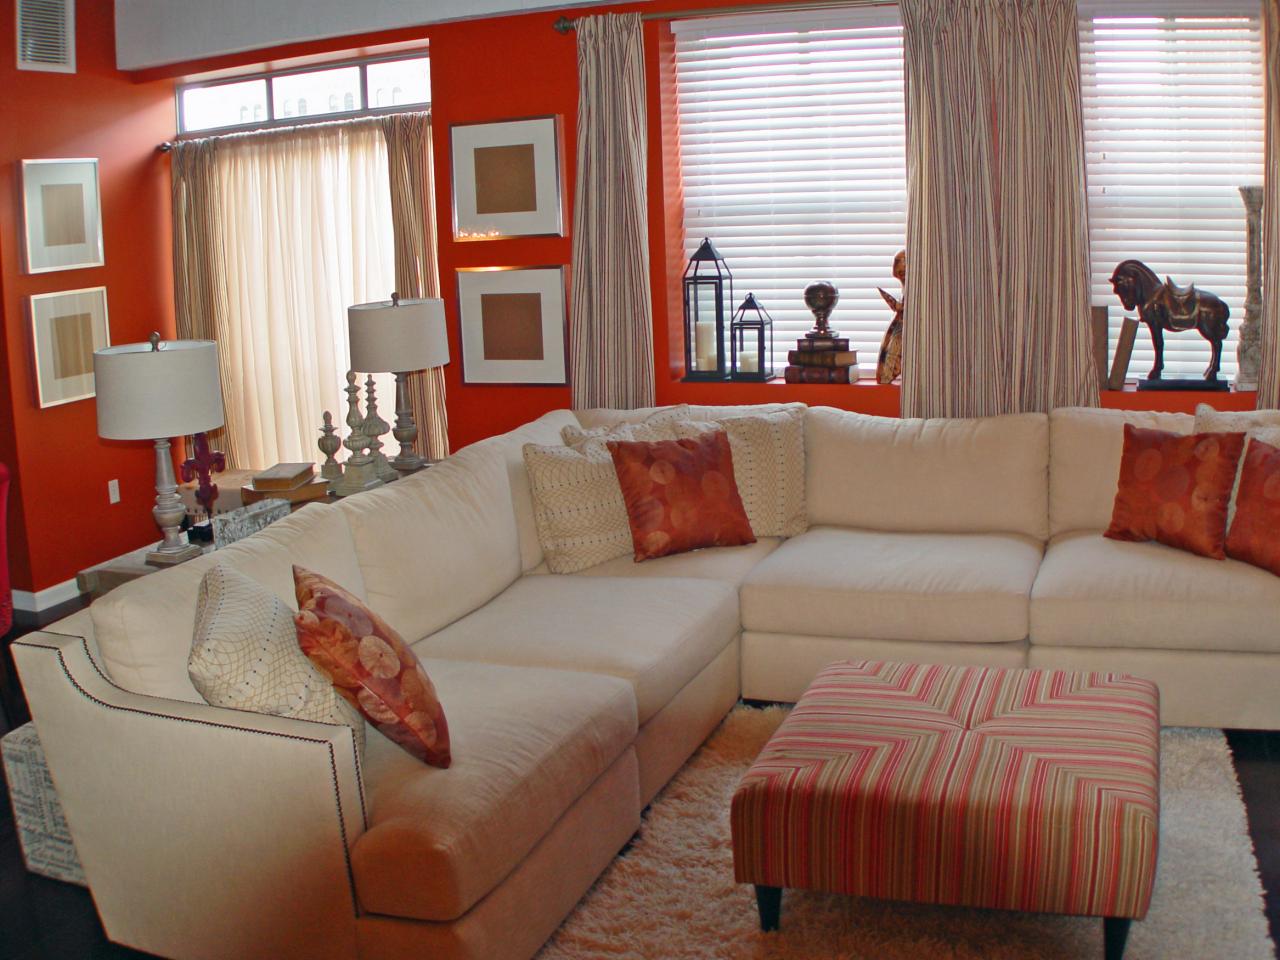 Artistic orange living room